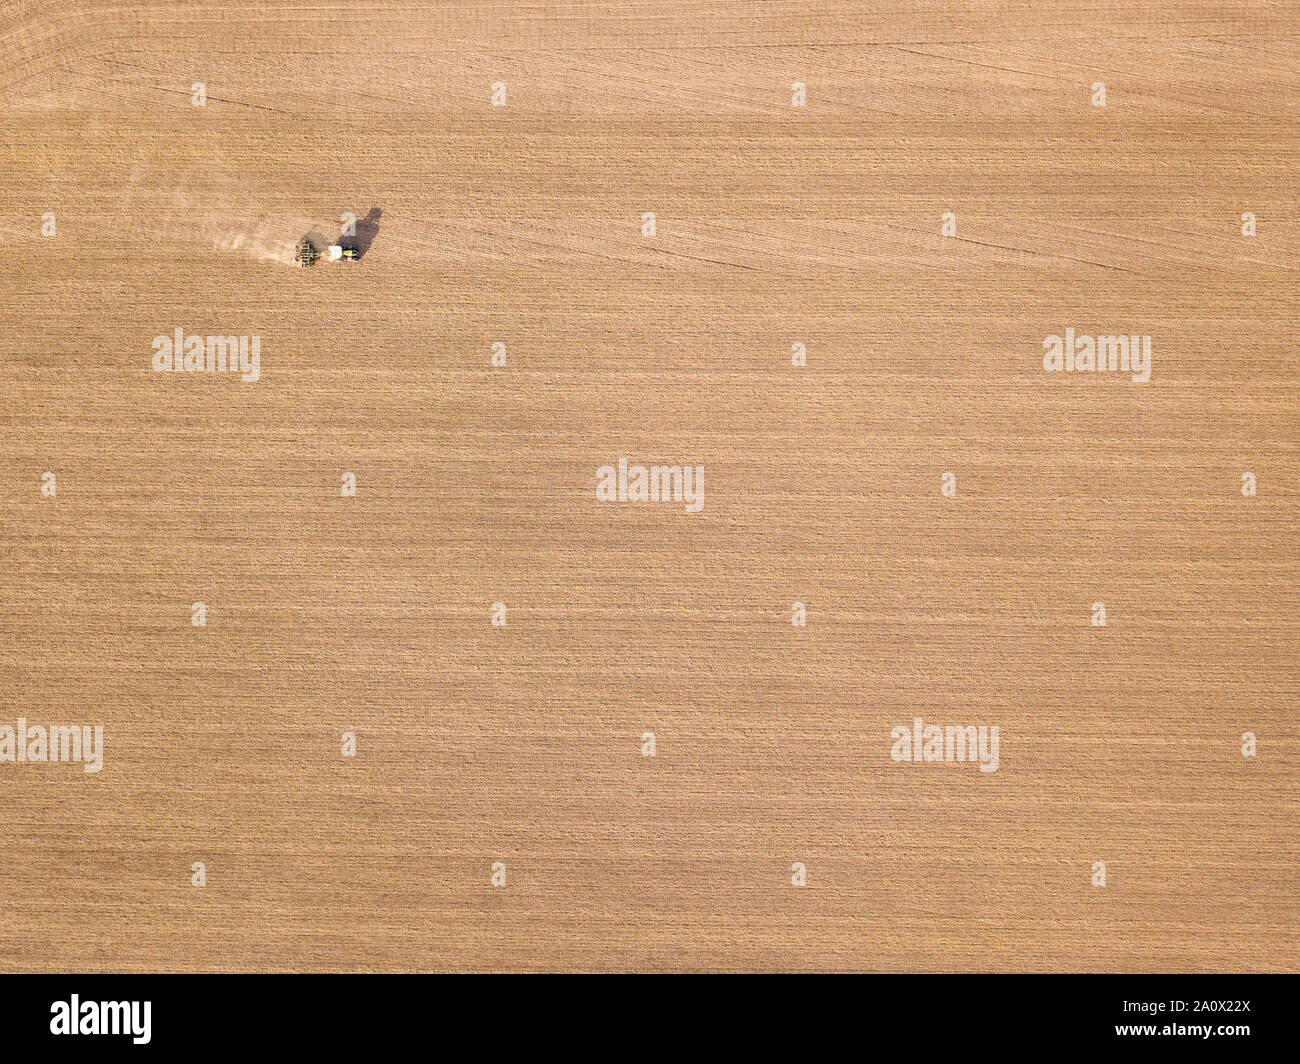 Tractor ploughing / global warning - bone dry field Stock Photo